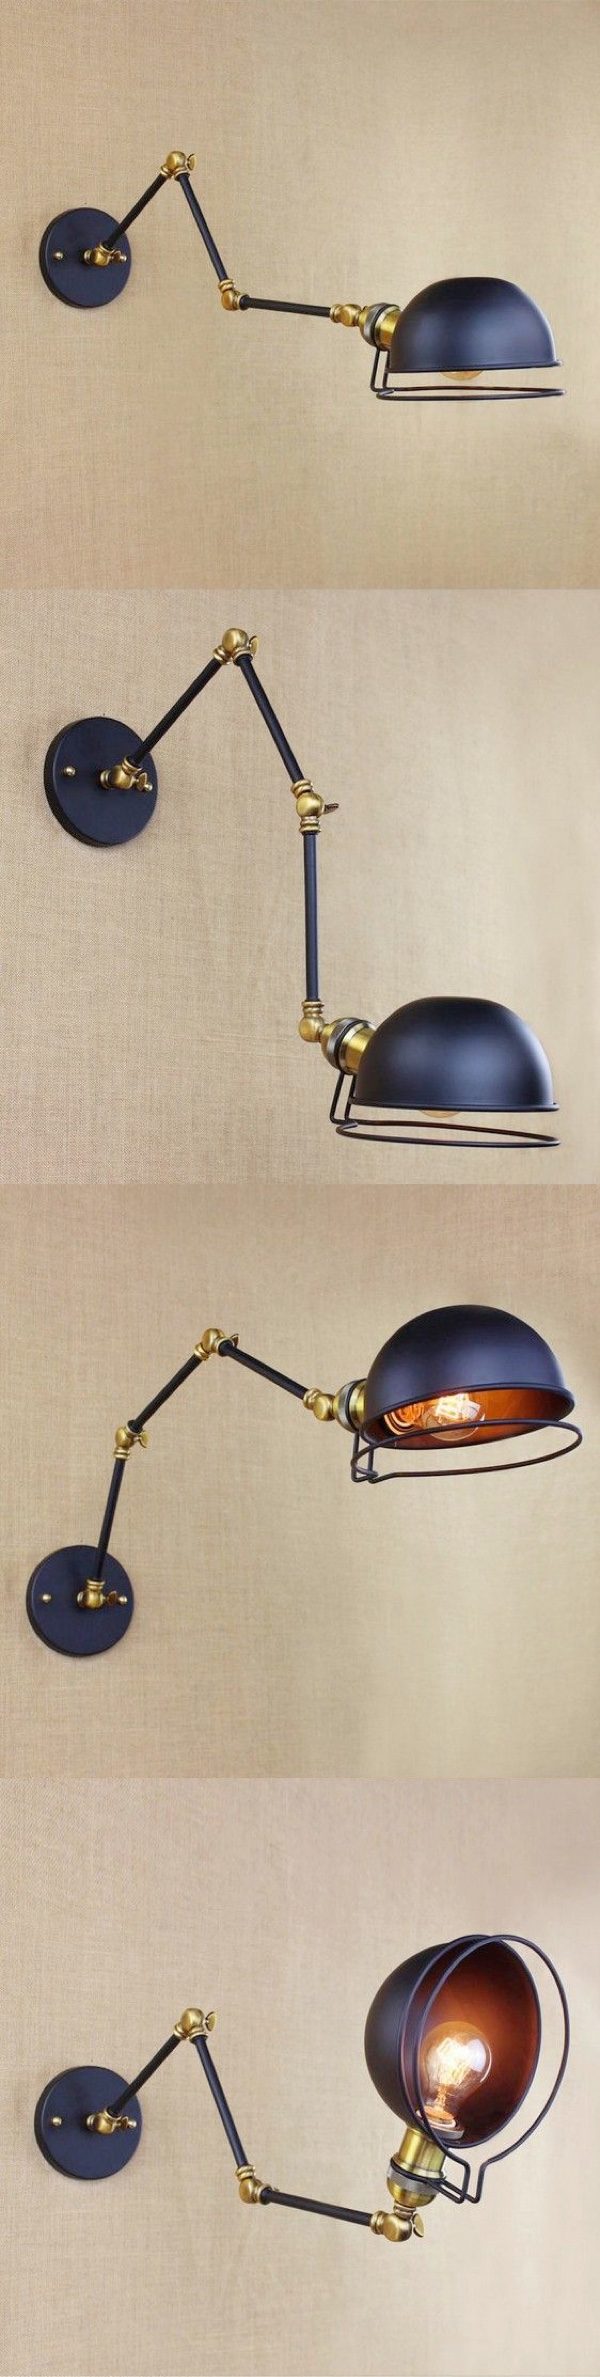 Industrial Nordic Swing Adjustable Arm Wall Sconce Light Black Metal Room Lamp 